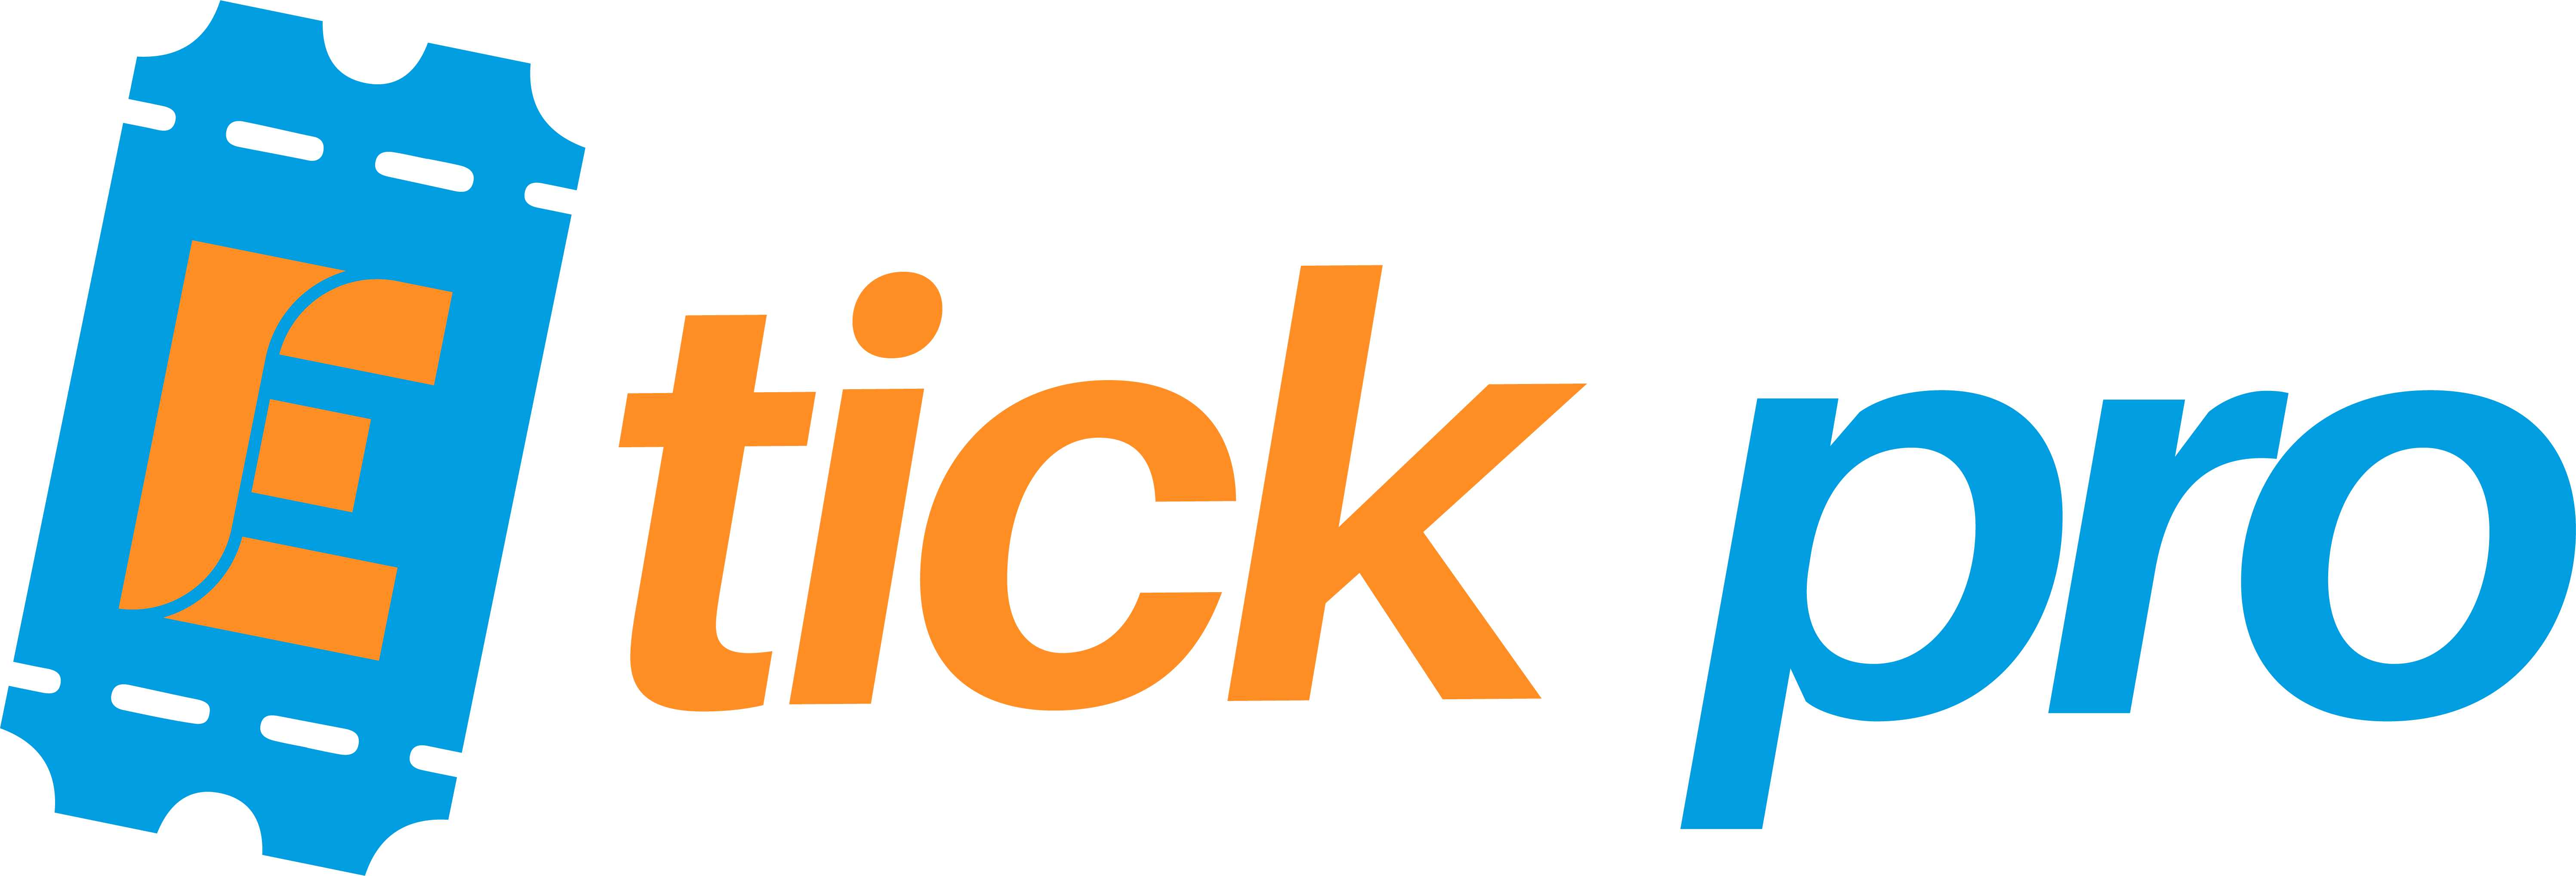 etick pro logo